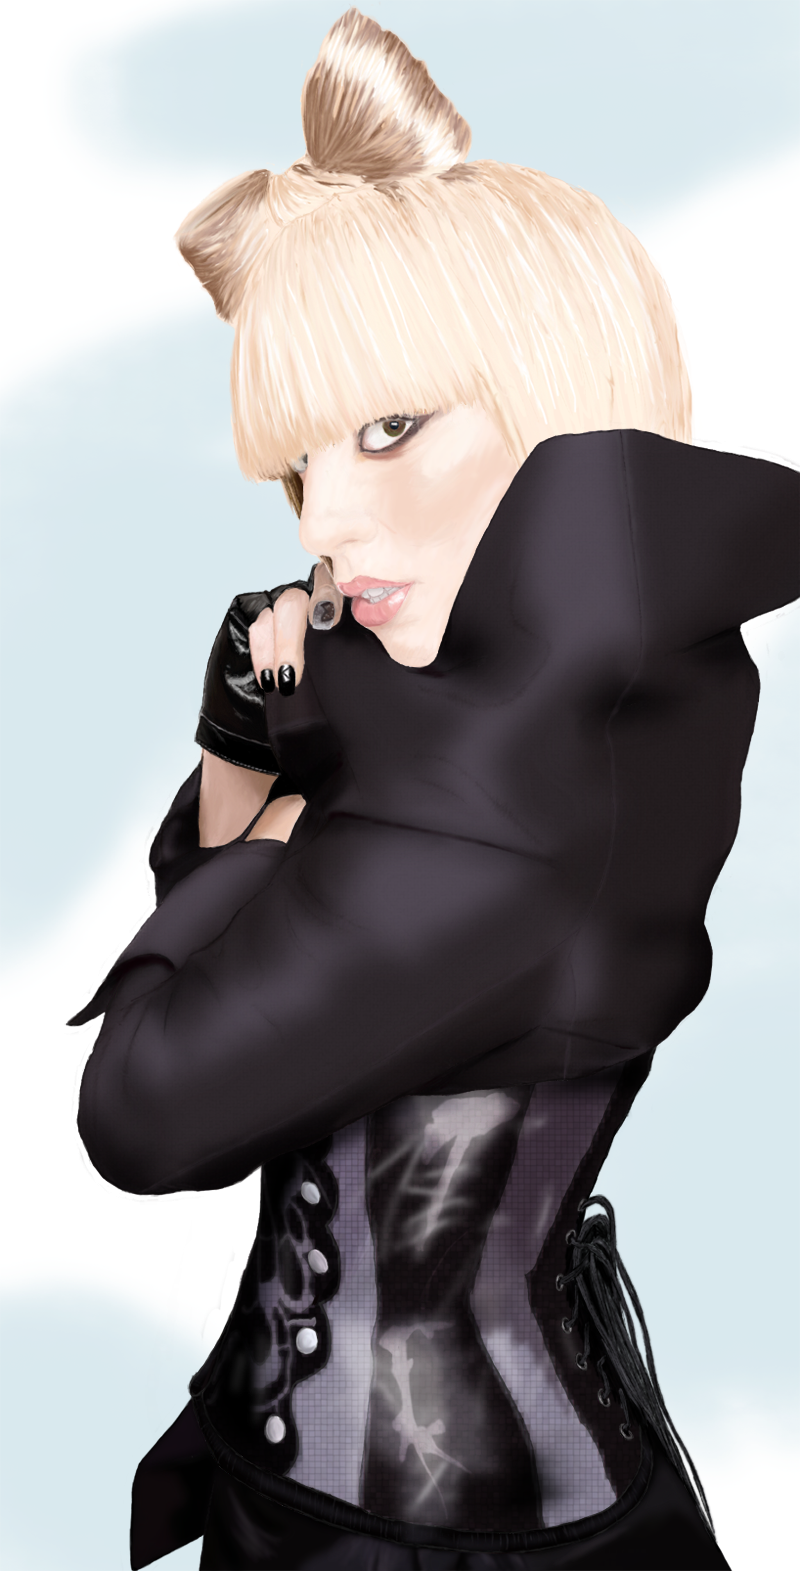 Lady Gaga - Look